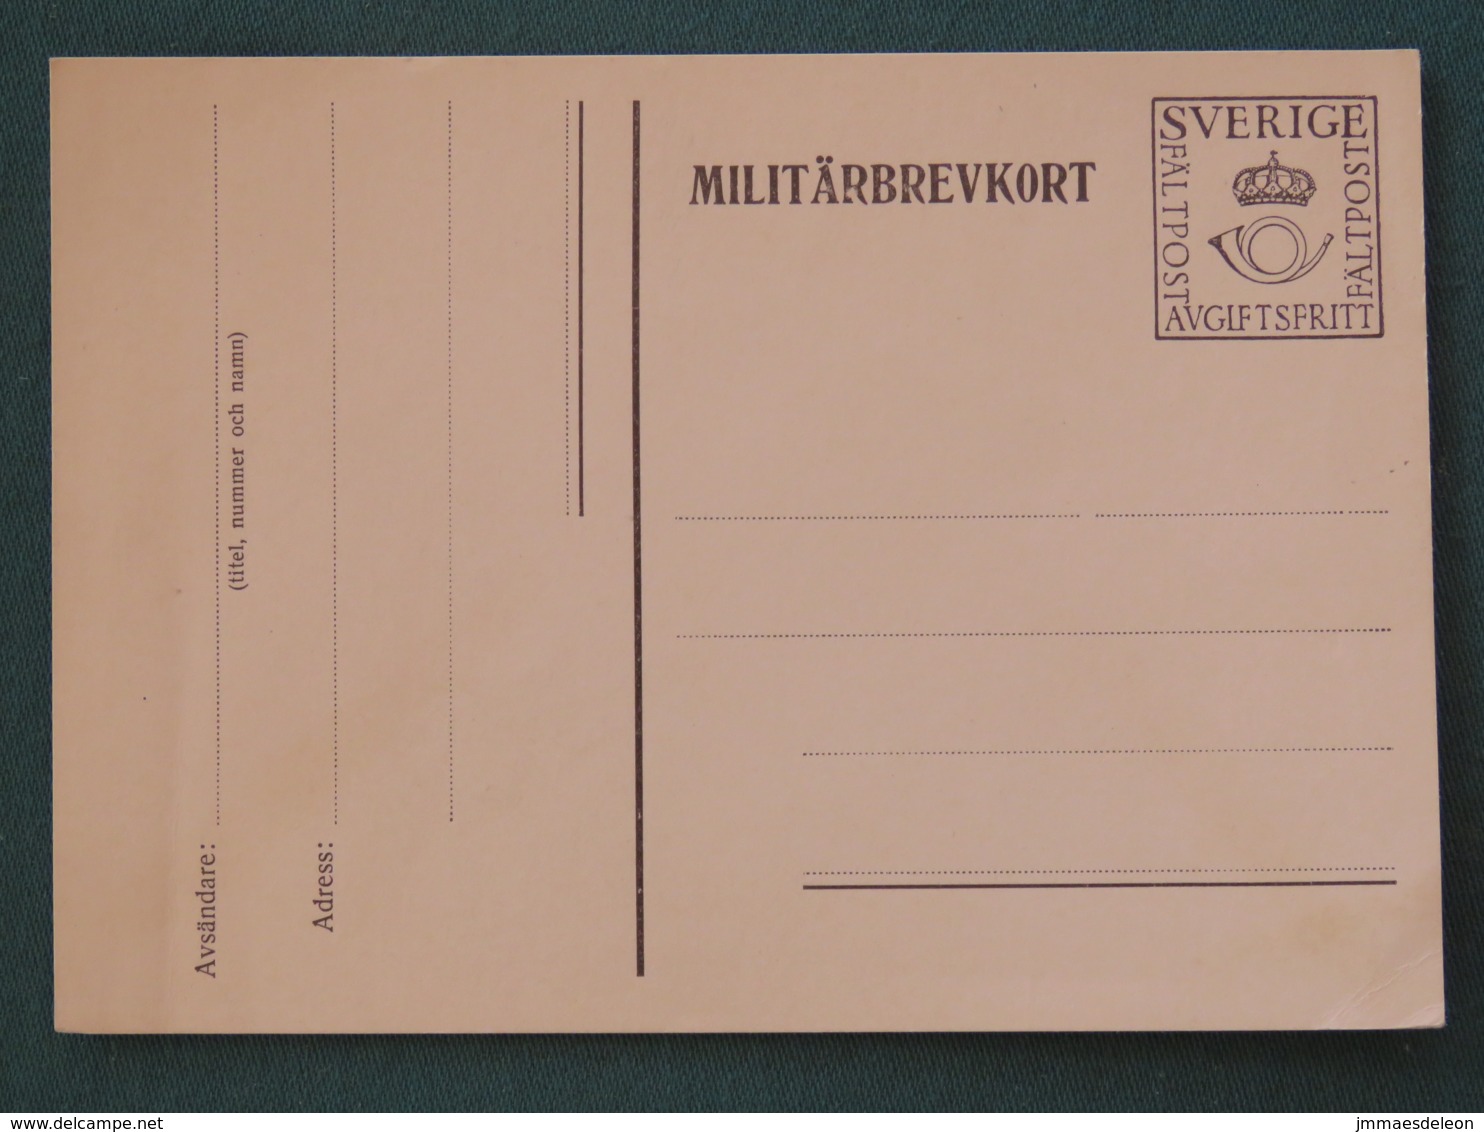 Sweden Around 1974 Military Army Unused Postcard - Military